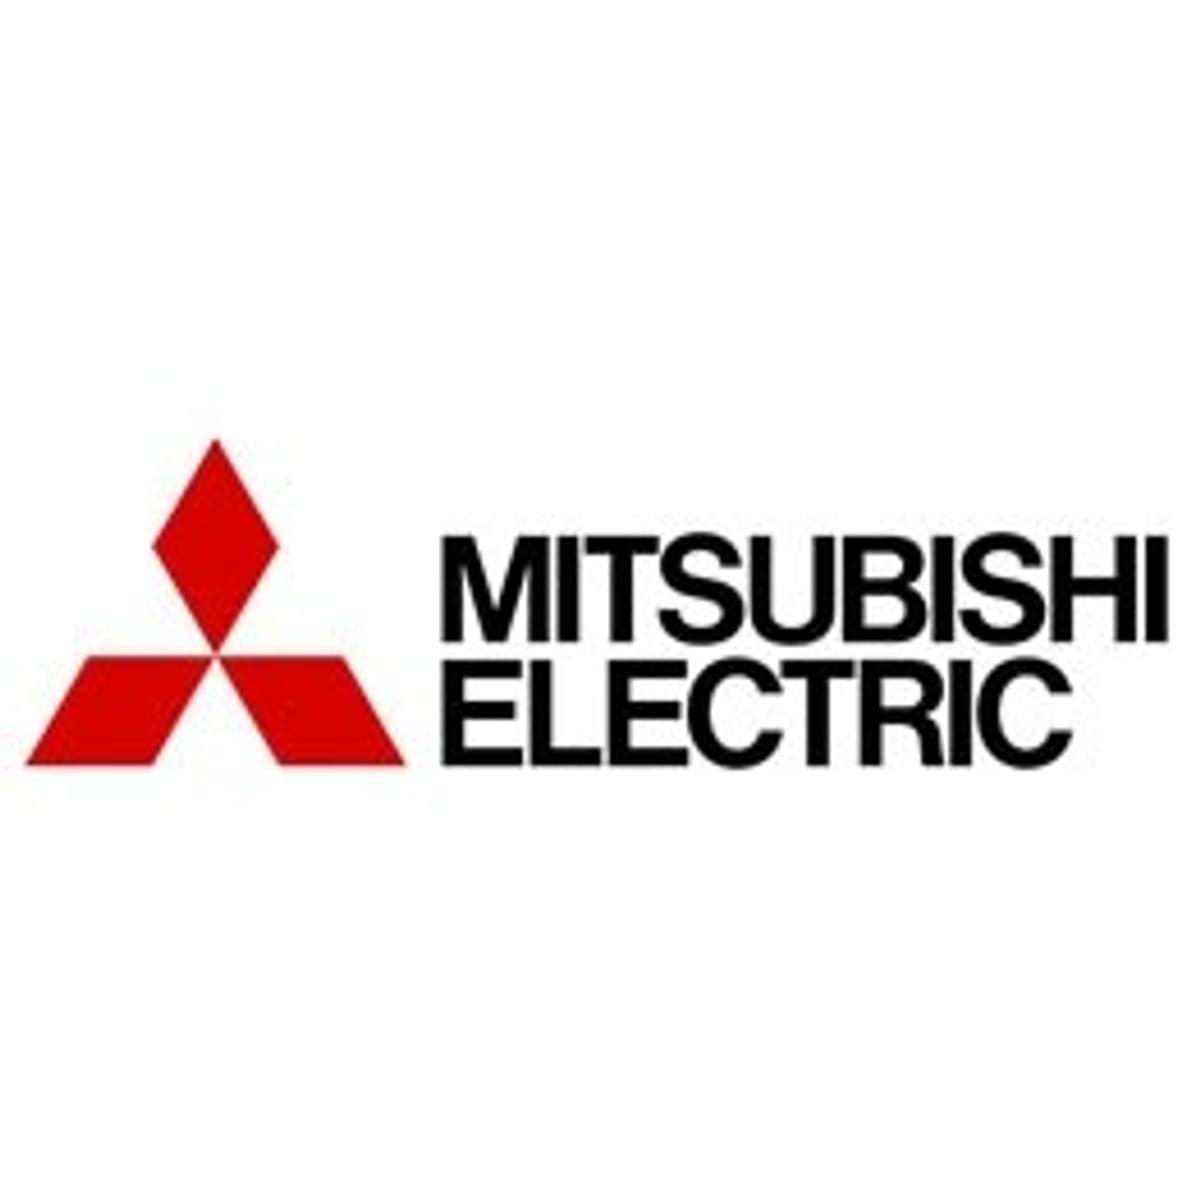 Mitsubishi Electric was doelwit van cyberaanval image